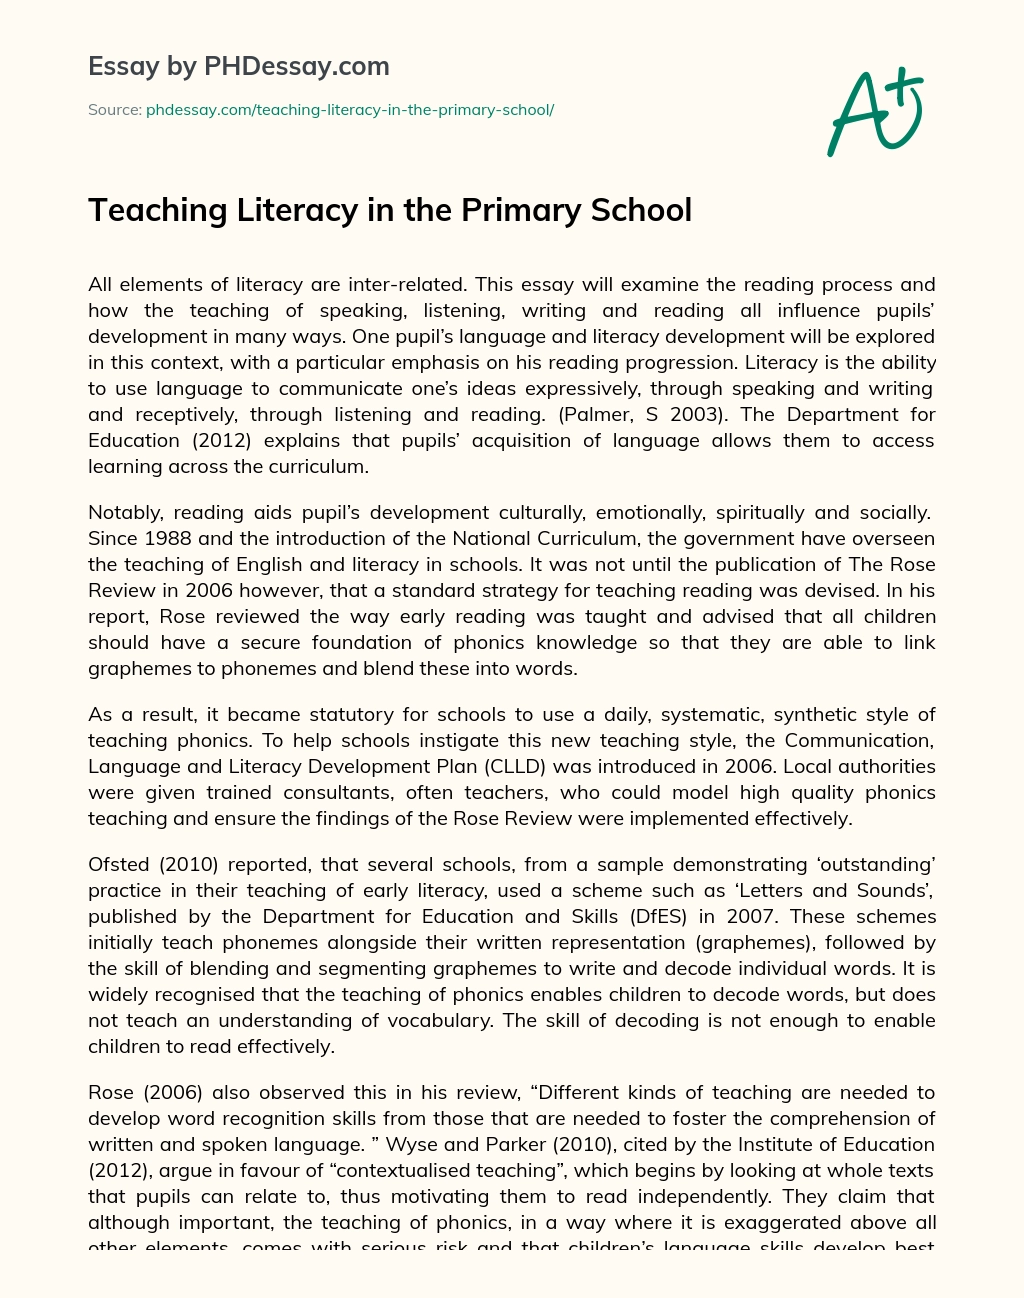 Teaching Literacy in the Primary School essay